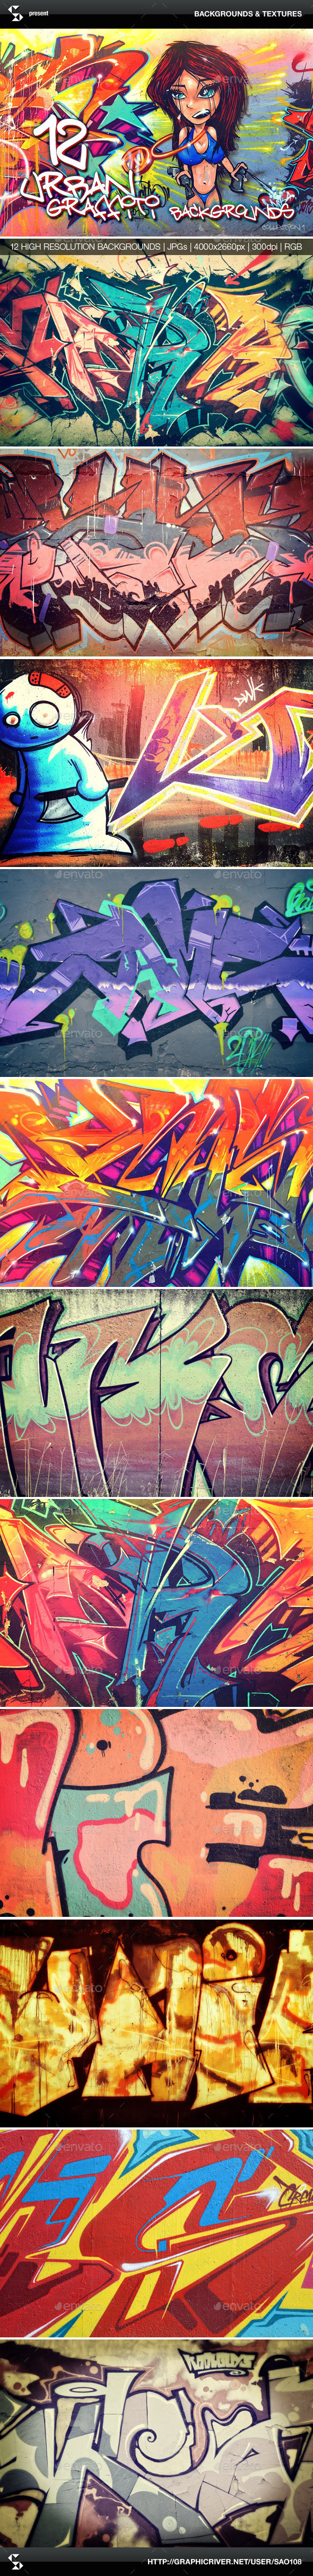 Urban graffiti backgrounds1 preview